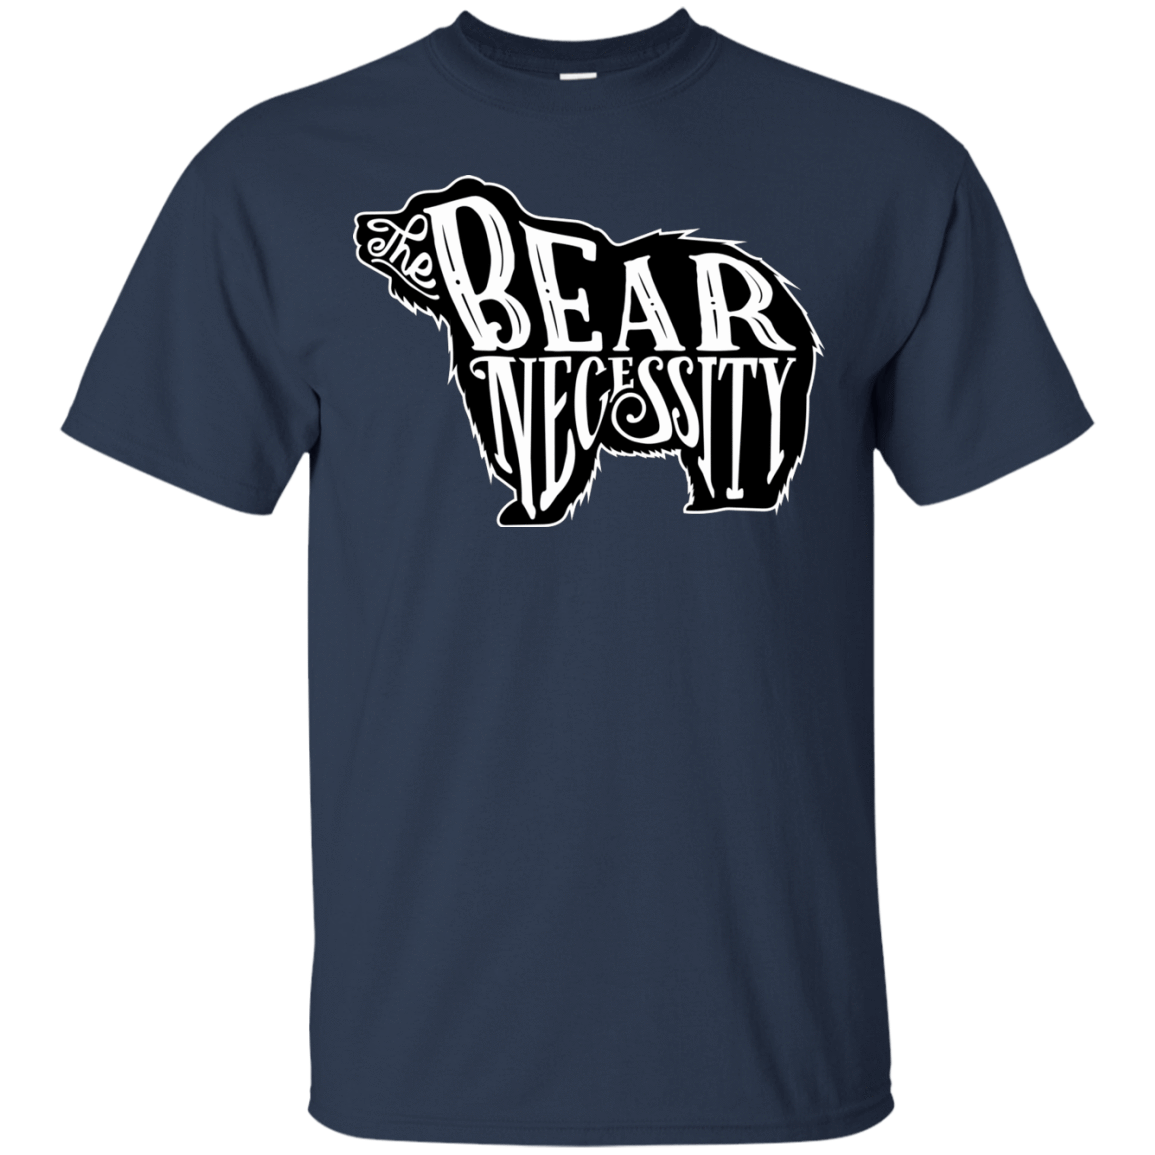 T-Shirts Navy / S The Bear Necessity T-Shirt